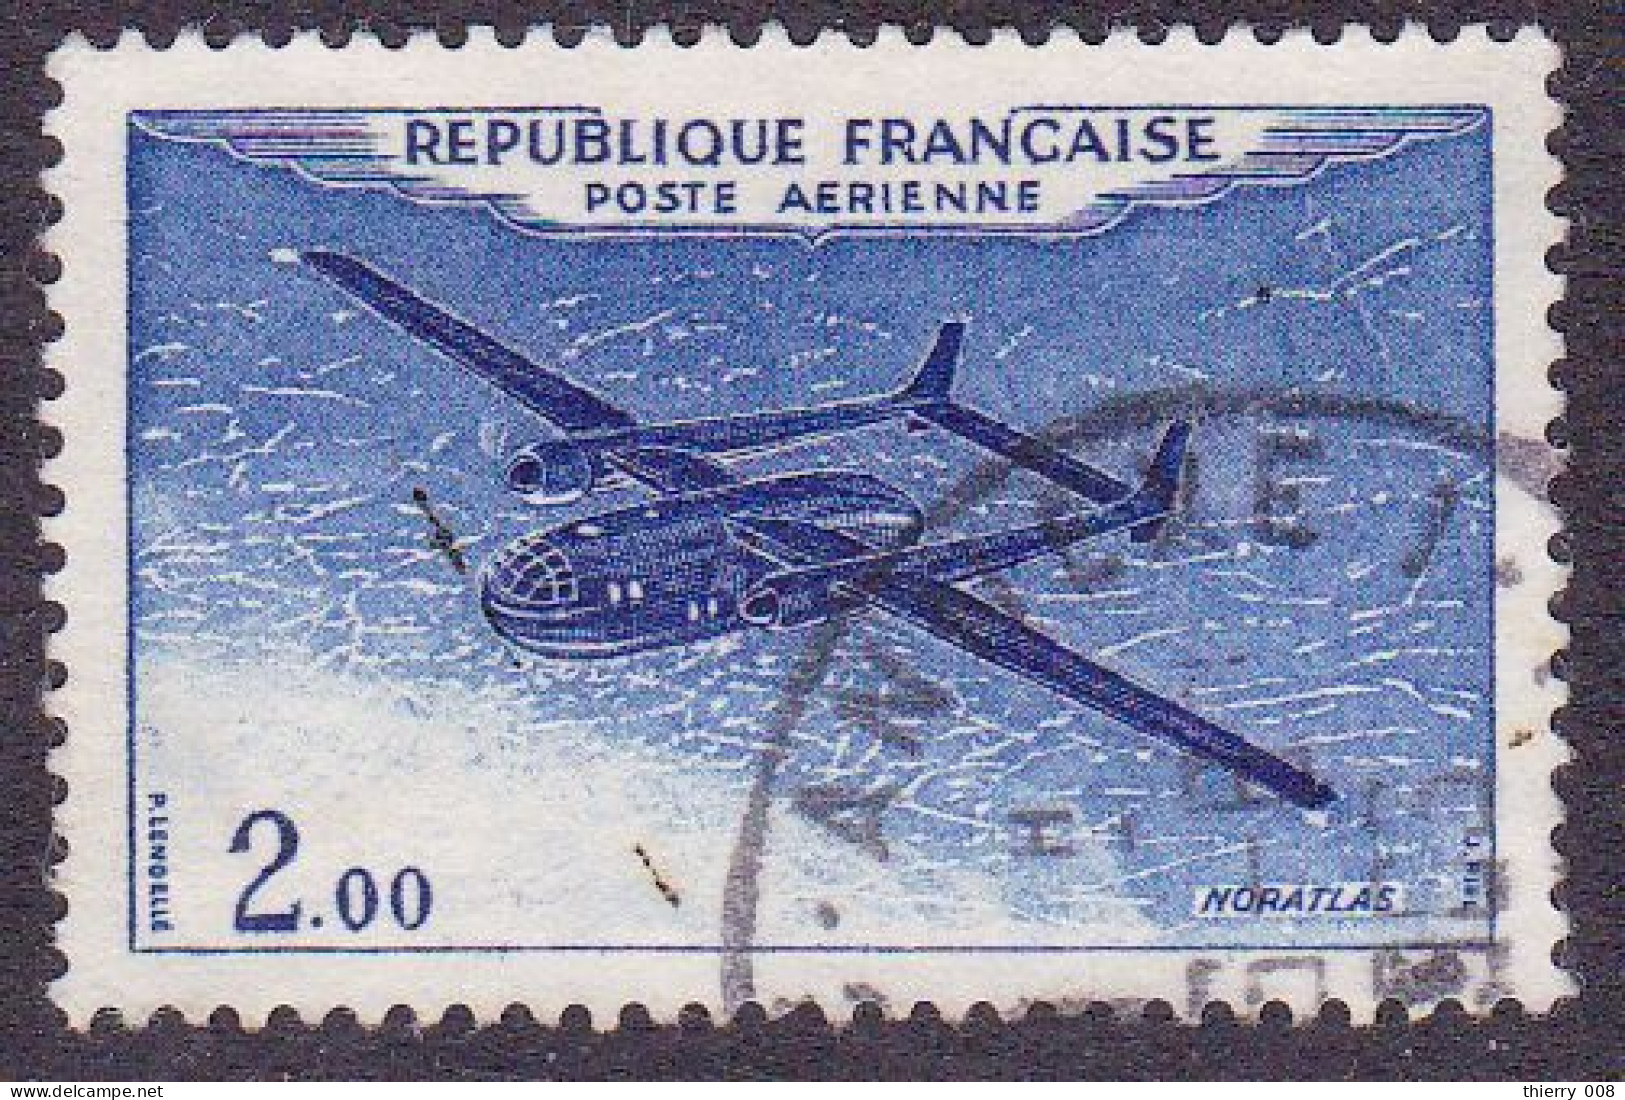 France 1960 1964 Poste Aérienne PA 38 Prototypes Nord Aviation Noratlas  Oblitéré - 1960-.... Used